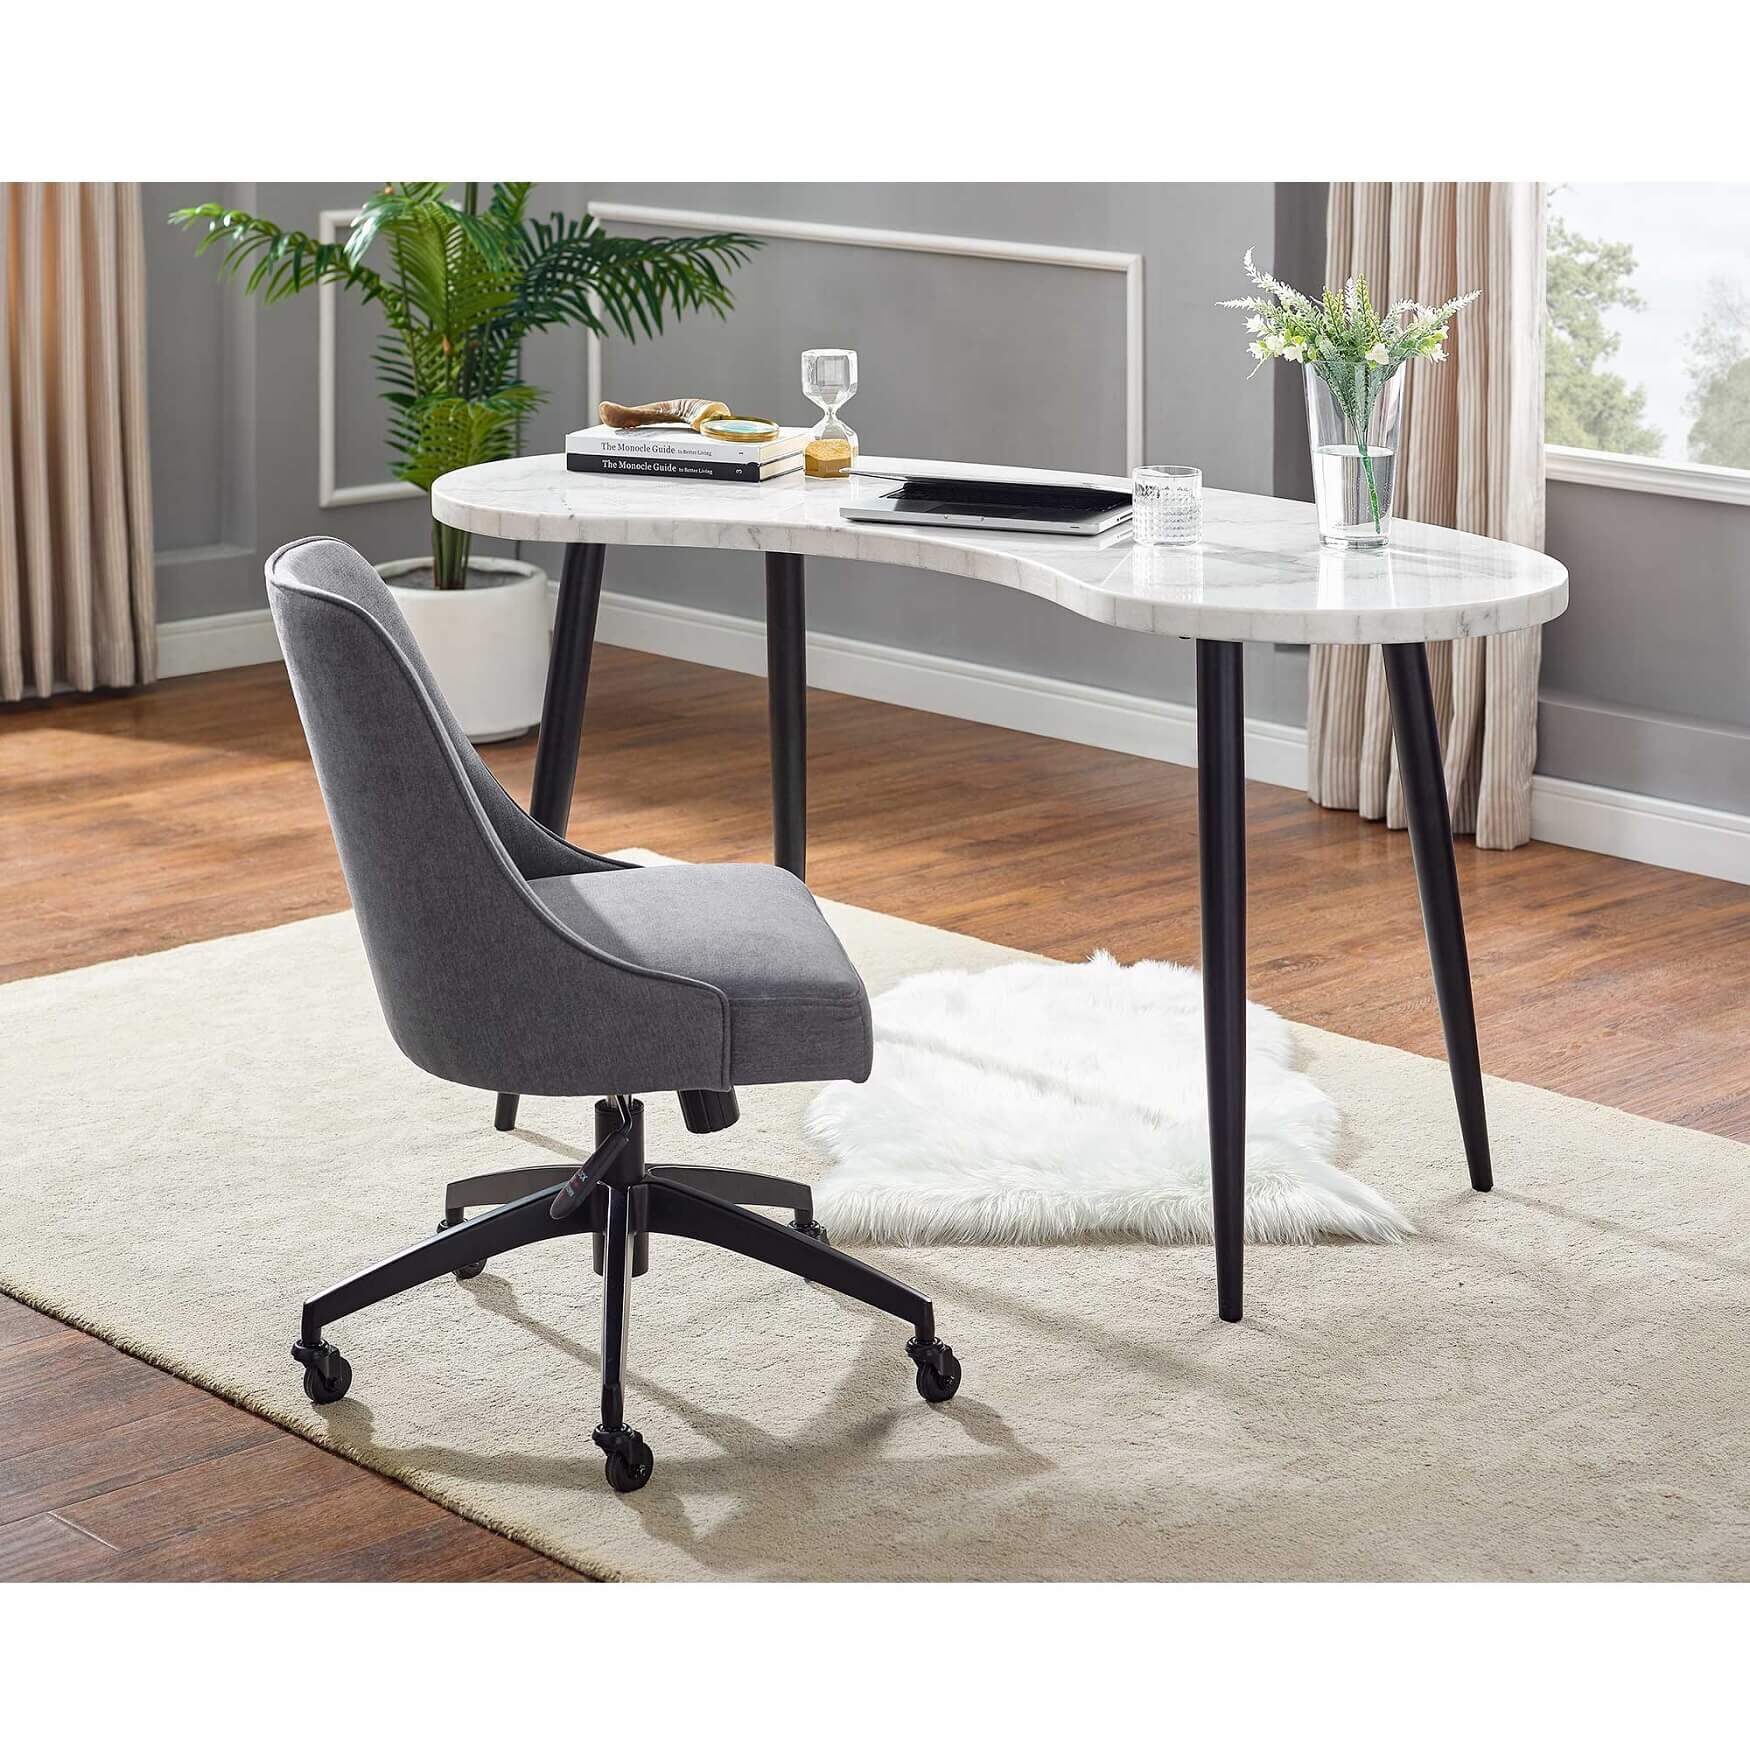 desk & chair set